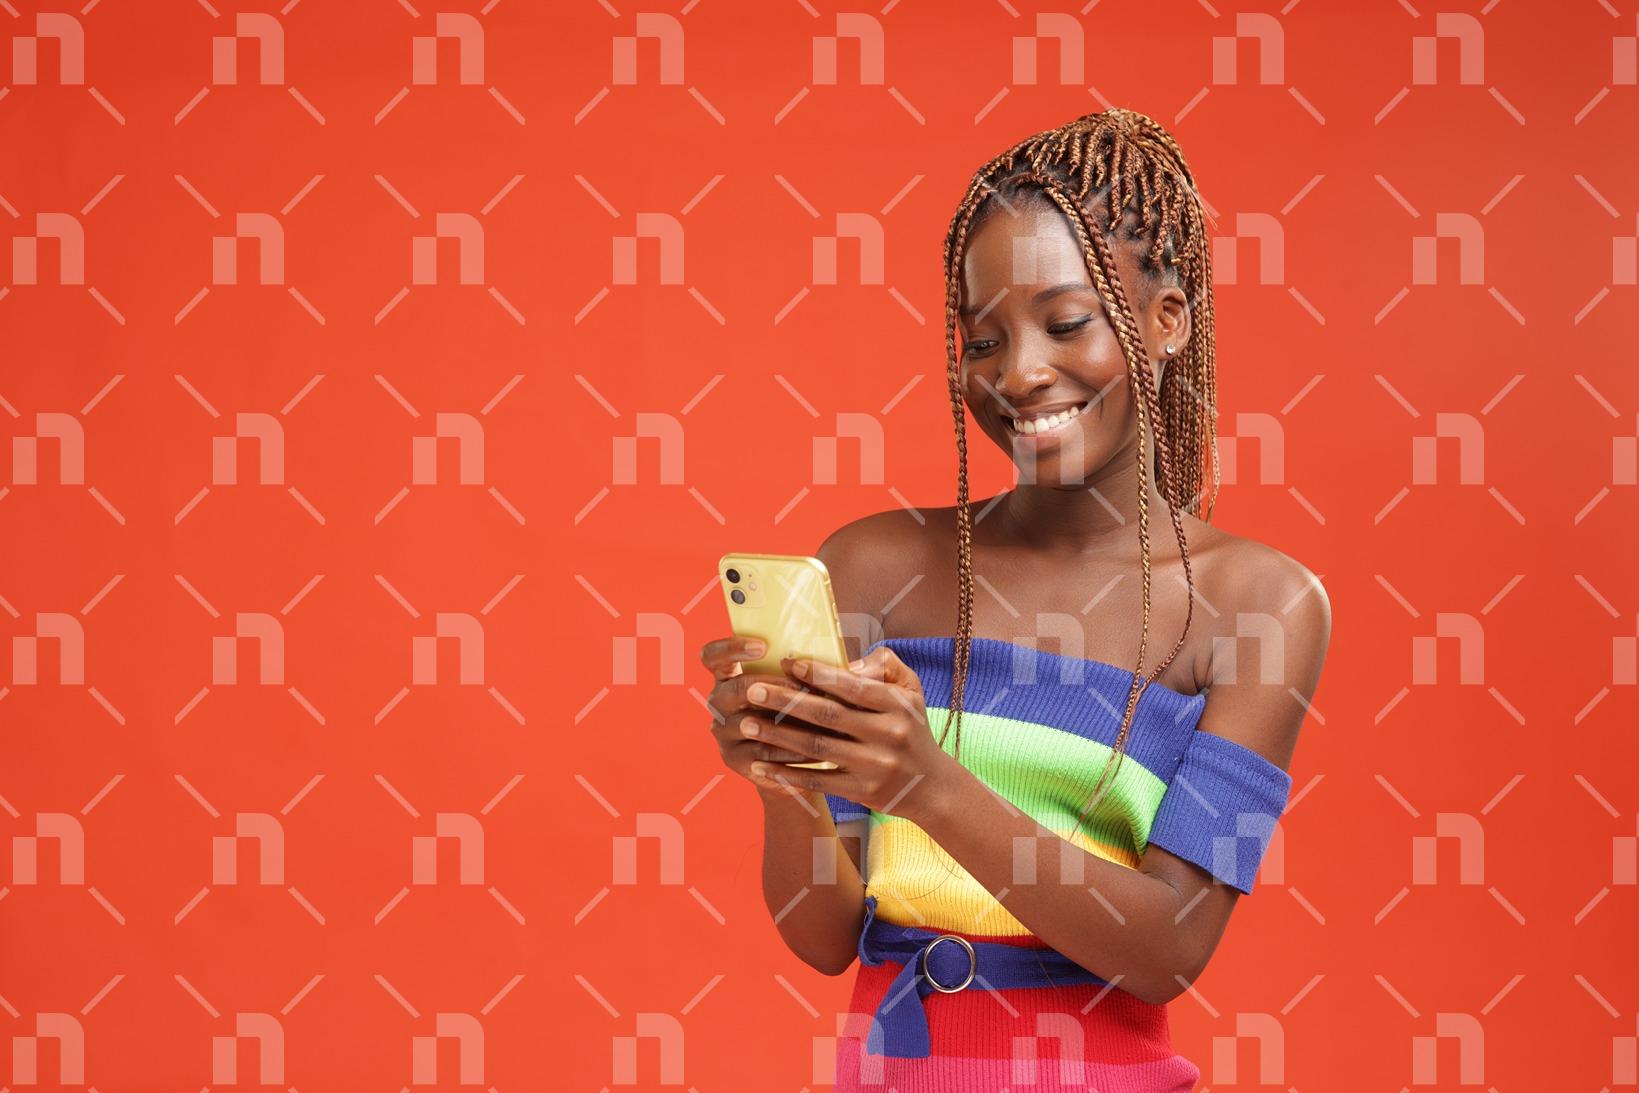 belle-jeune-fille-africaine-moderne-vetue-dune-robe-coloree-observant-son-telephone-un-fond-orange